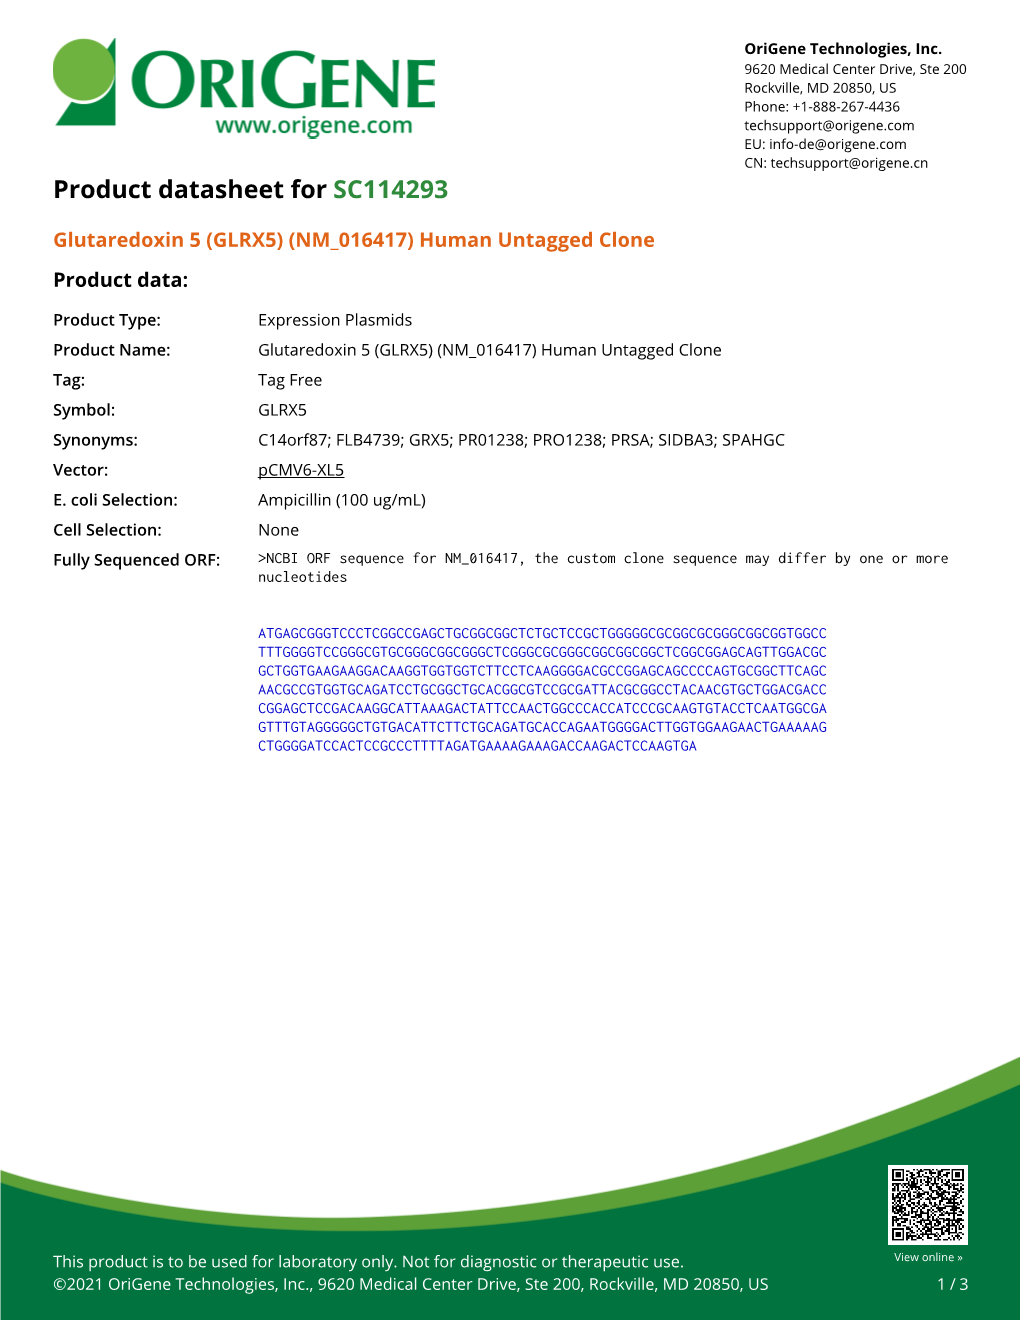 Glutaredoxin 5 (GLRX5) (NM 016417) Human Untagged Clone Product Data